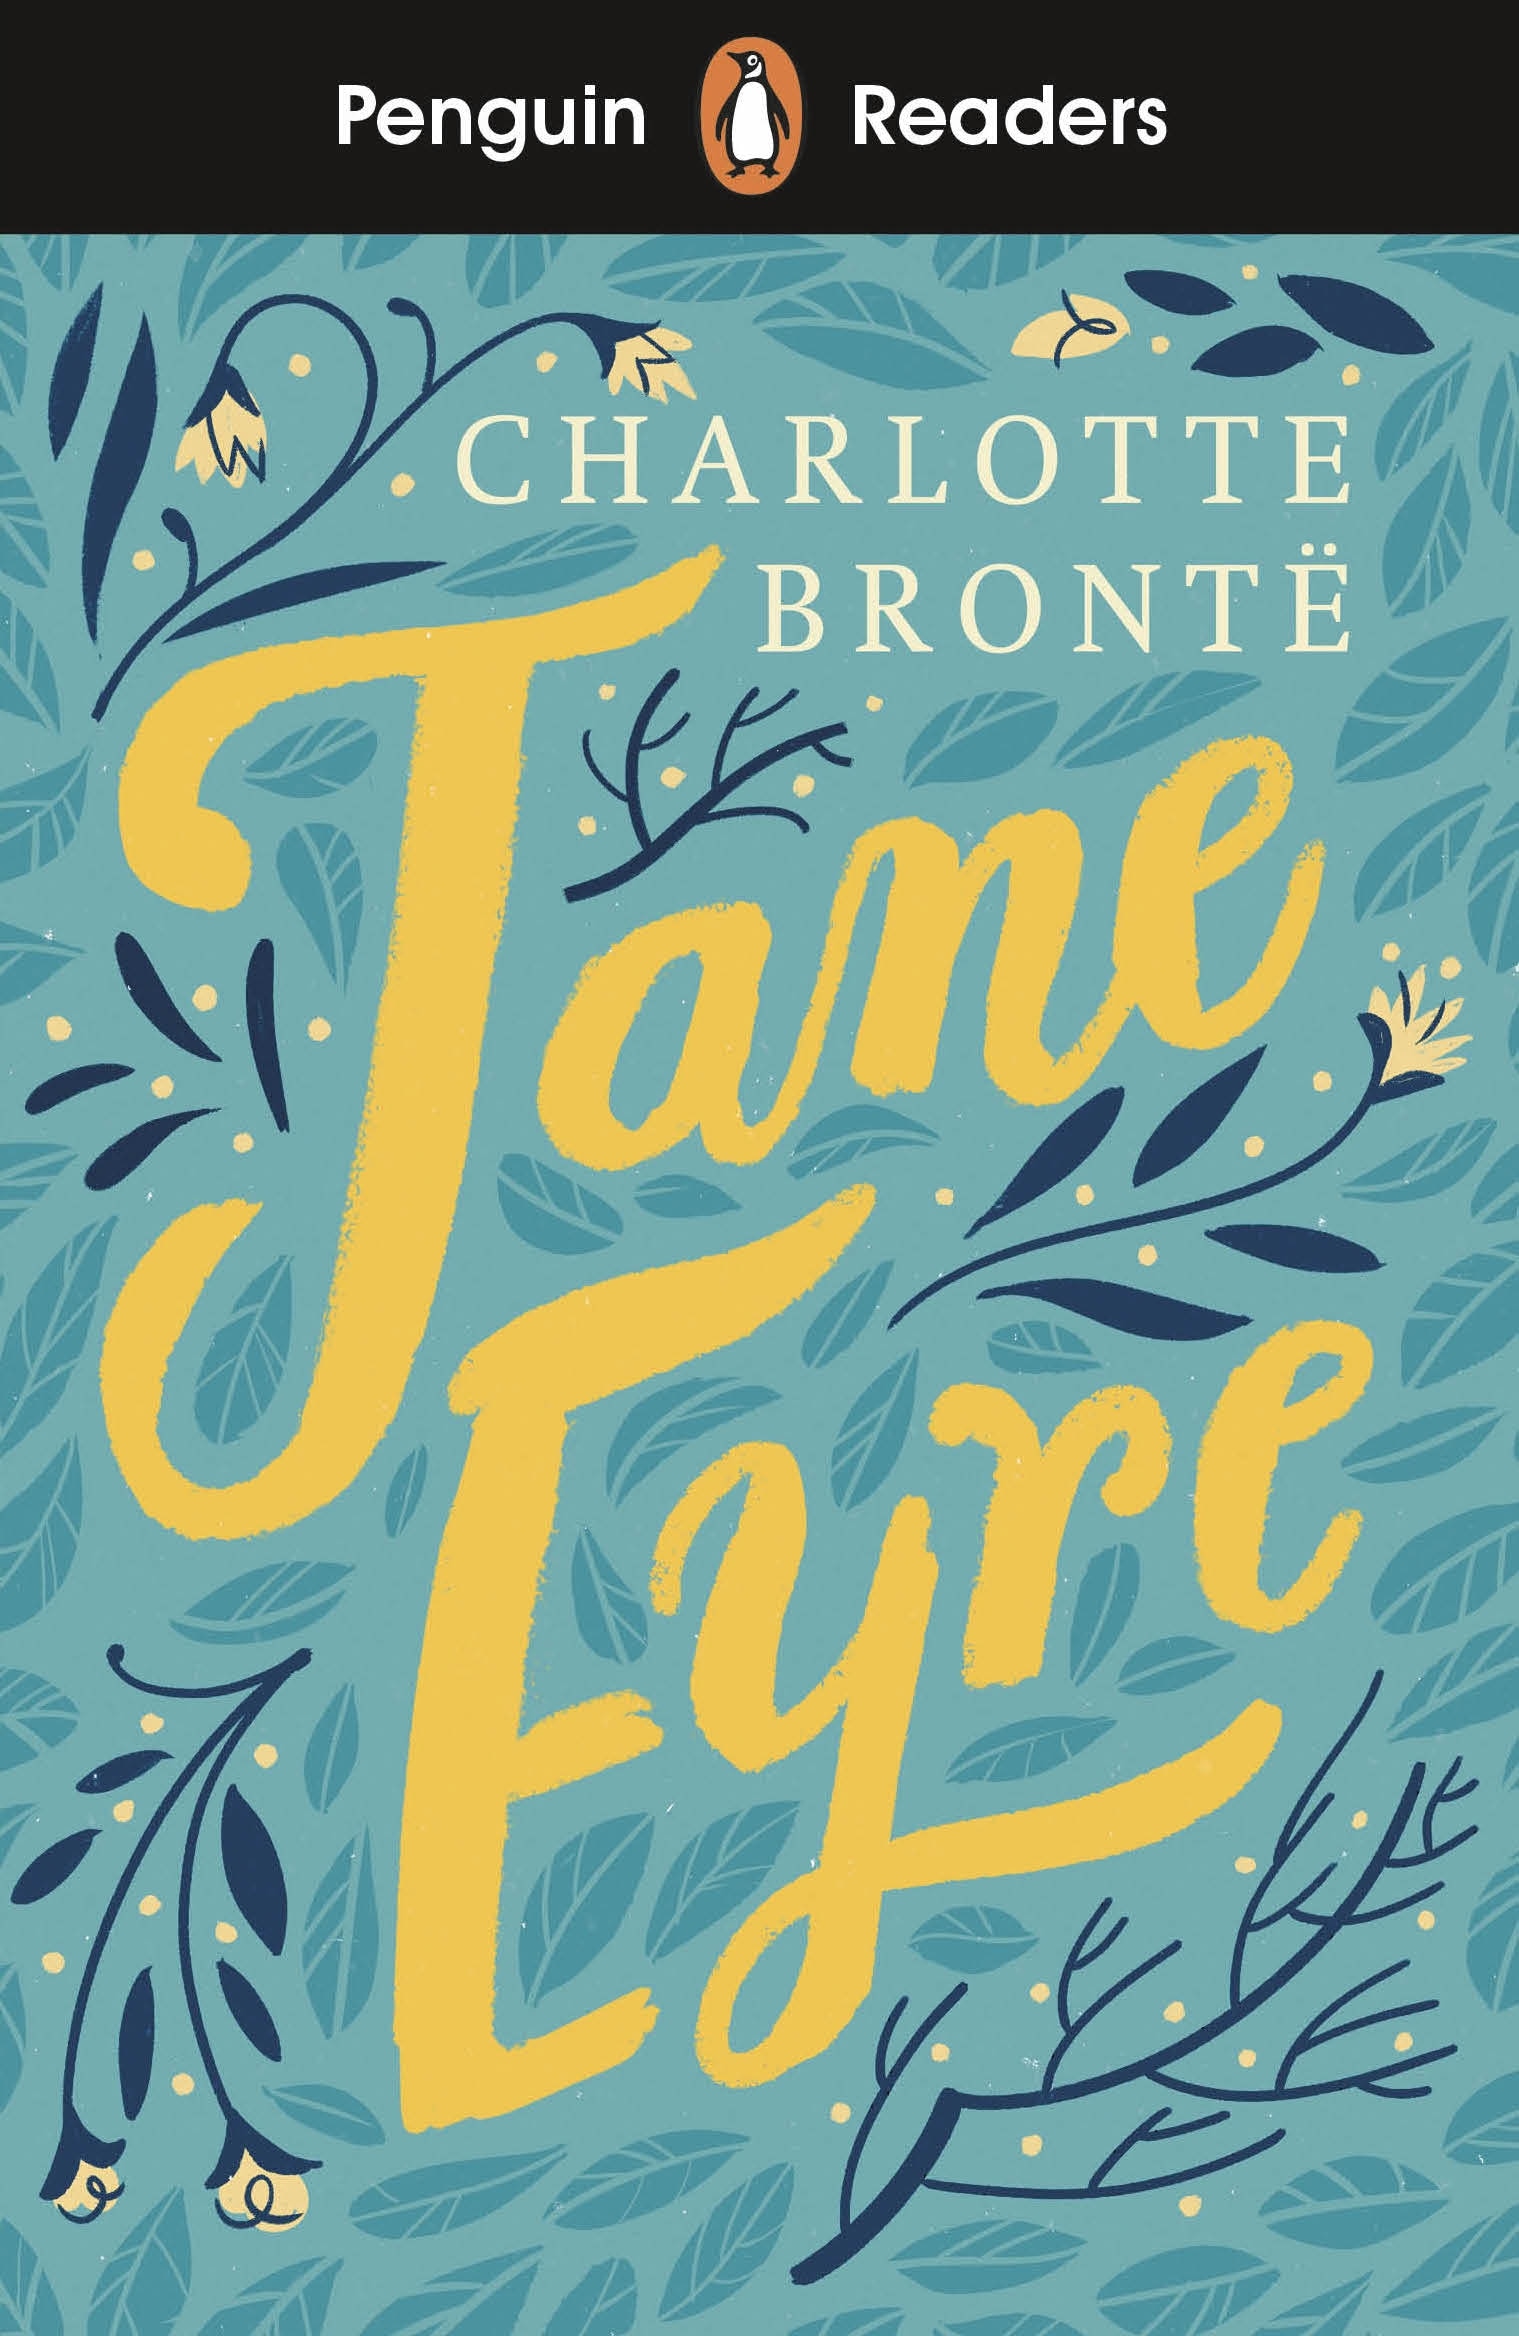 Book “Penguin Readers Level 4: Jane Eyre (ELT Graded Reader)” by Charlotte Bronte — May 14, 2020